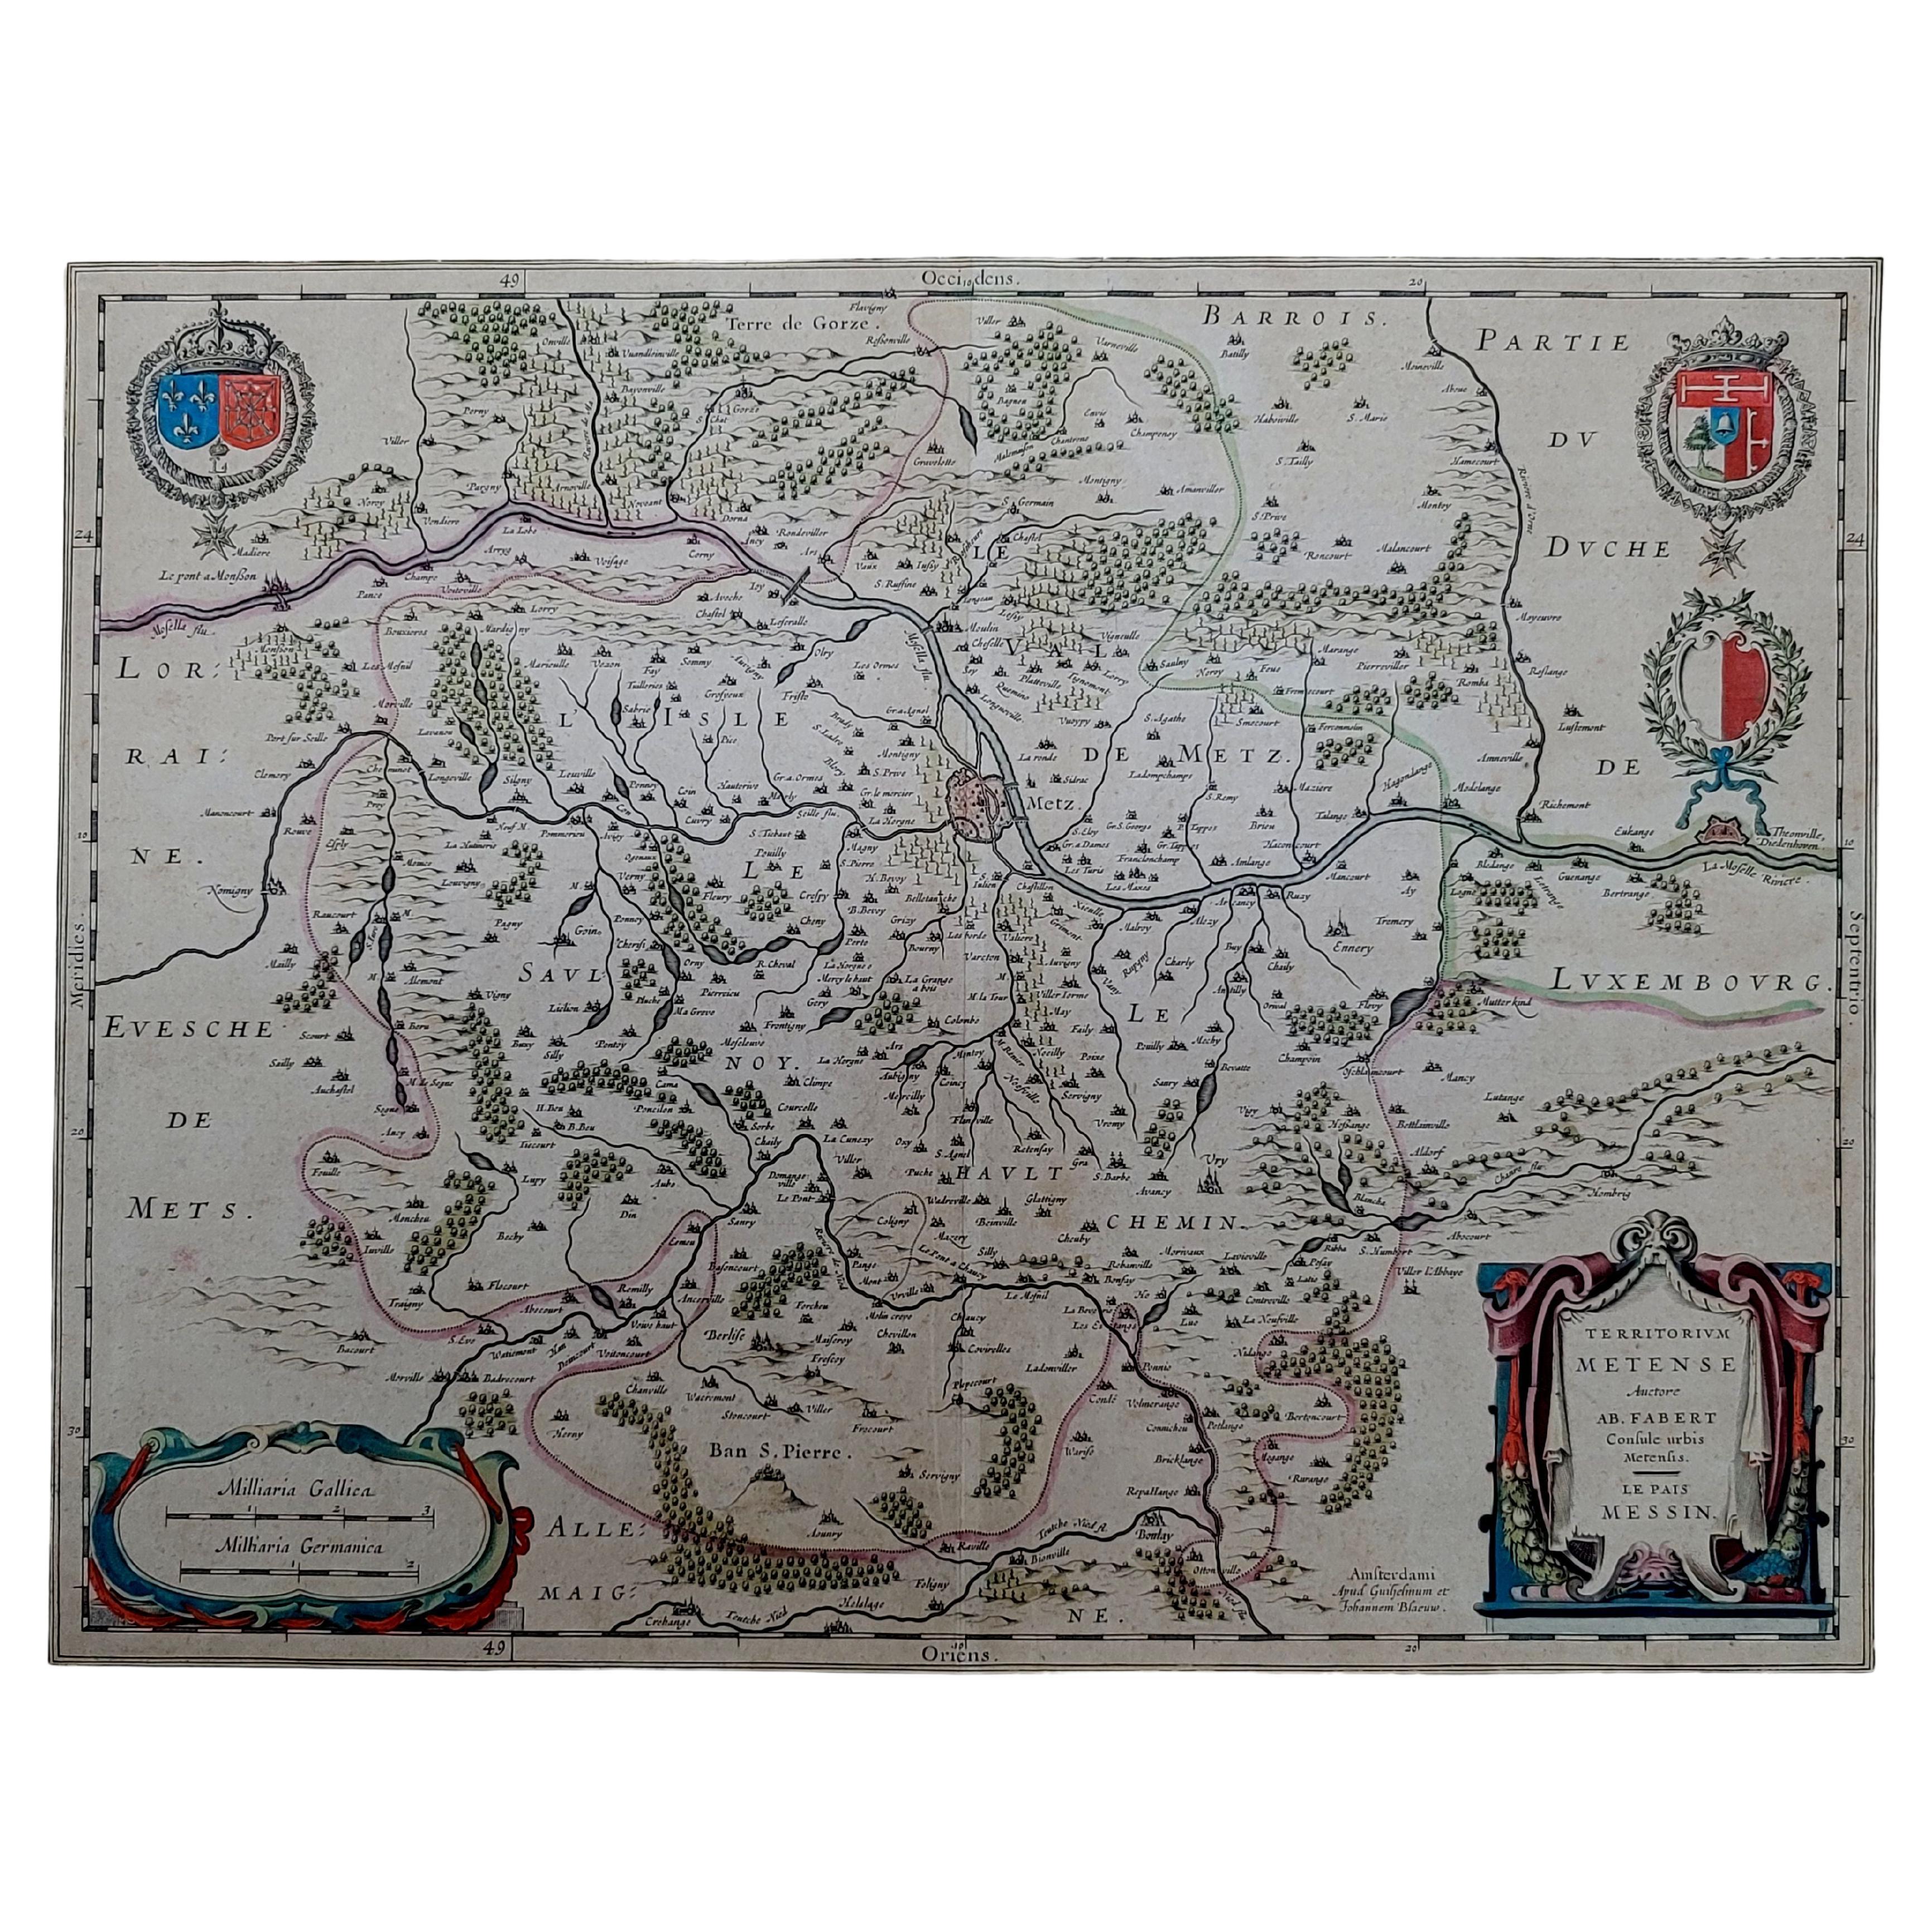 1656 Jansson Map Metz Region of France Entitled "Territorium Metense" Ric0014 For Sale